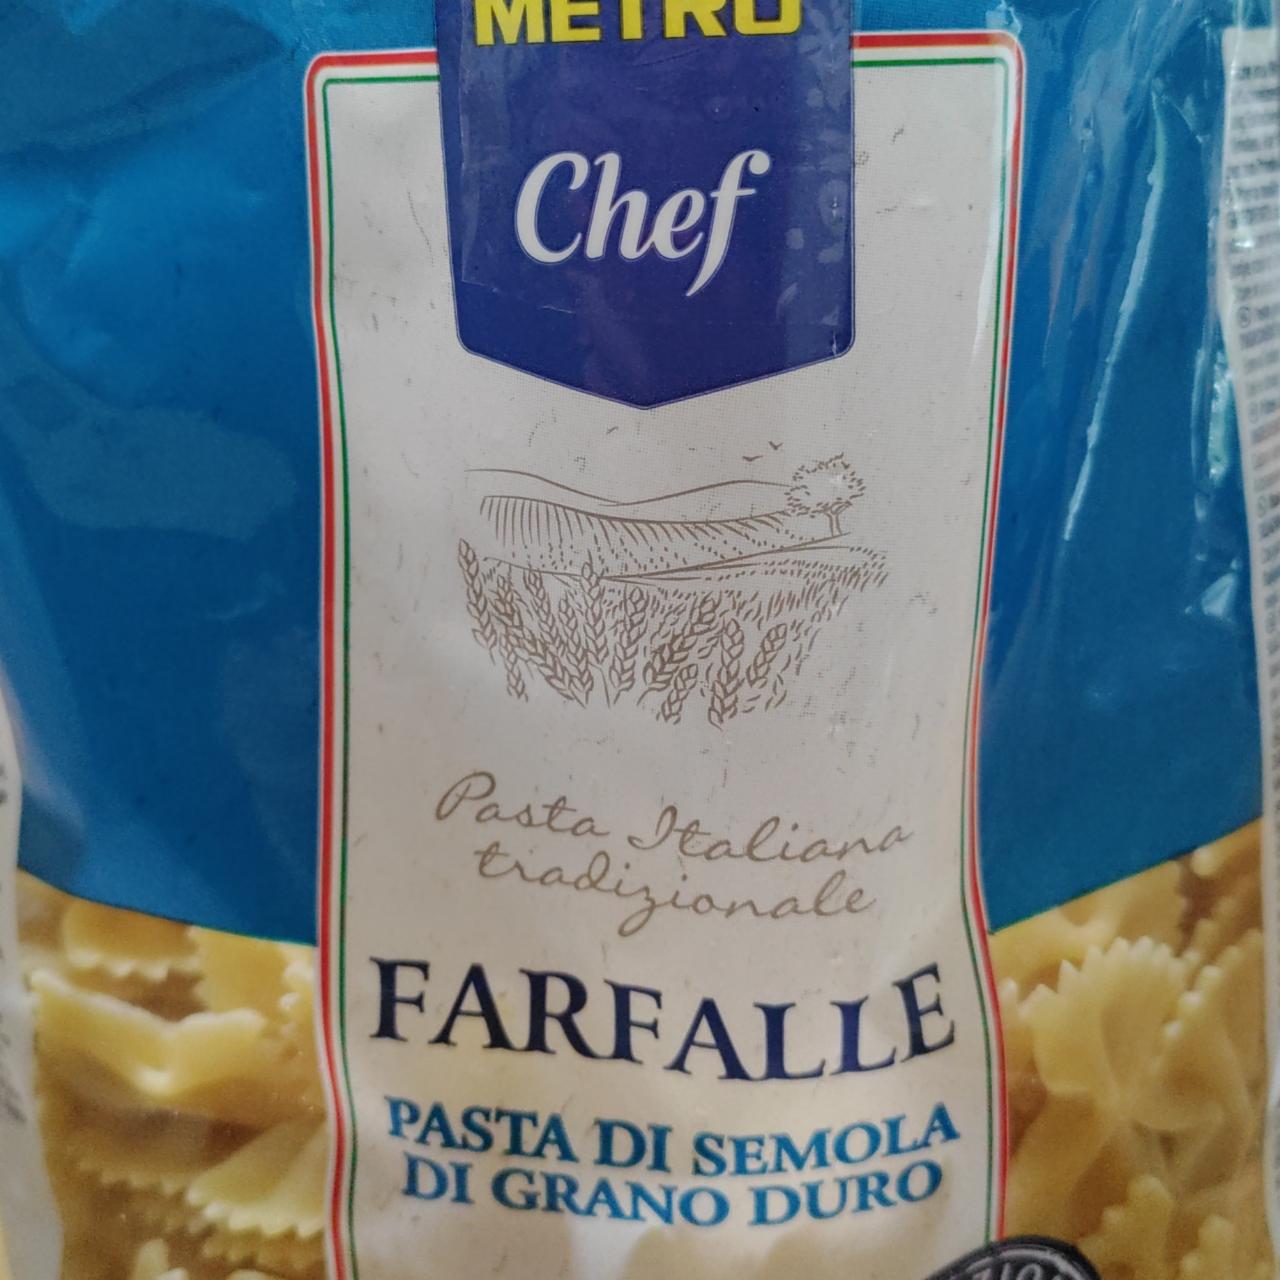 Fotografie - Farfalle Metro Chef